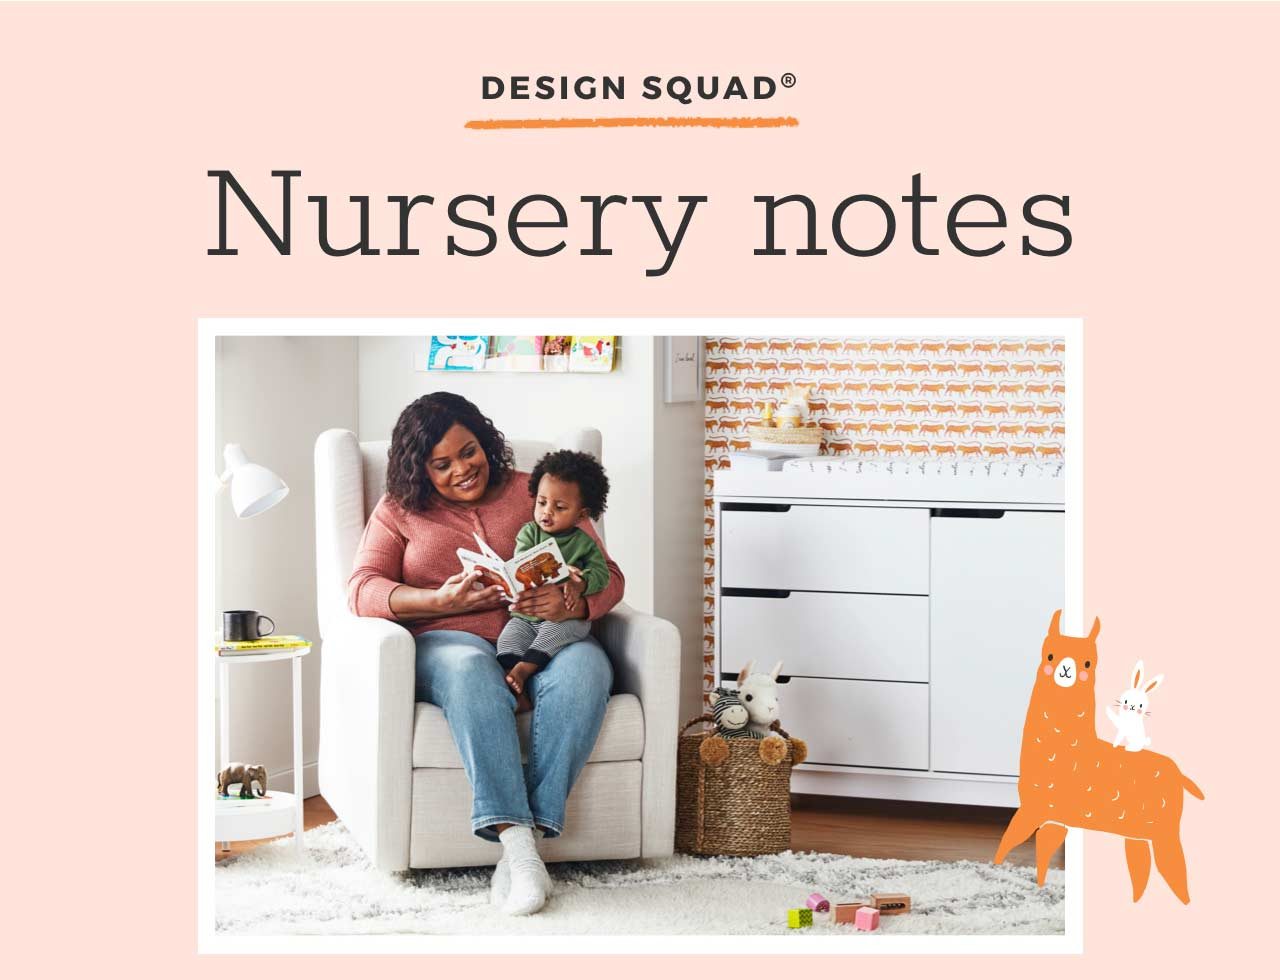 DESIGN SQUAD. Nursery notes